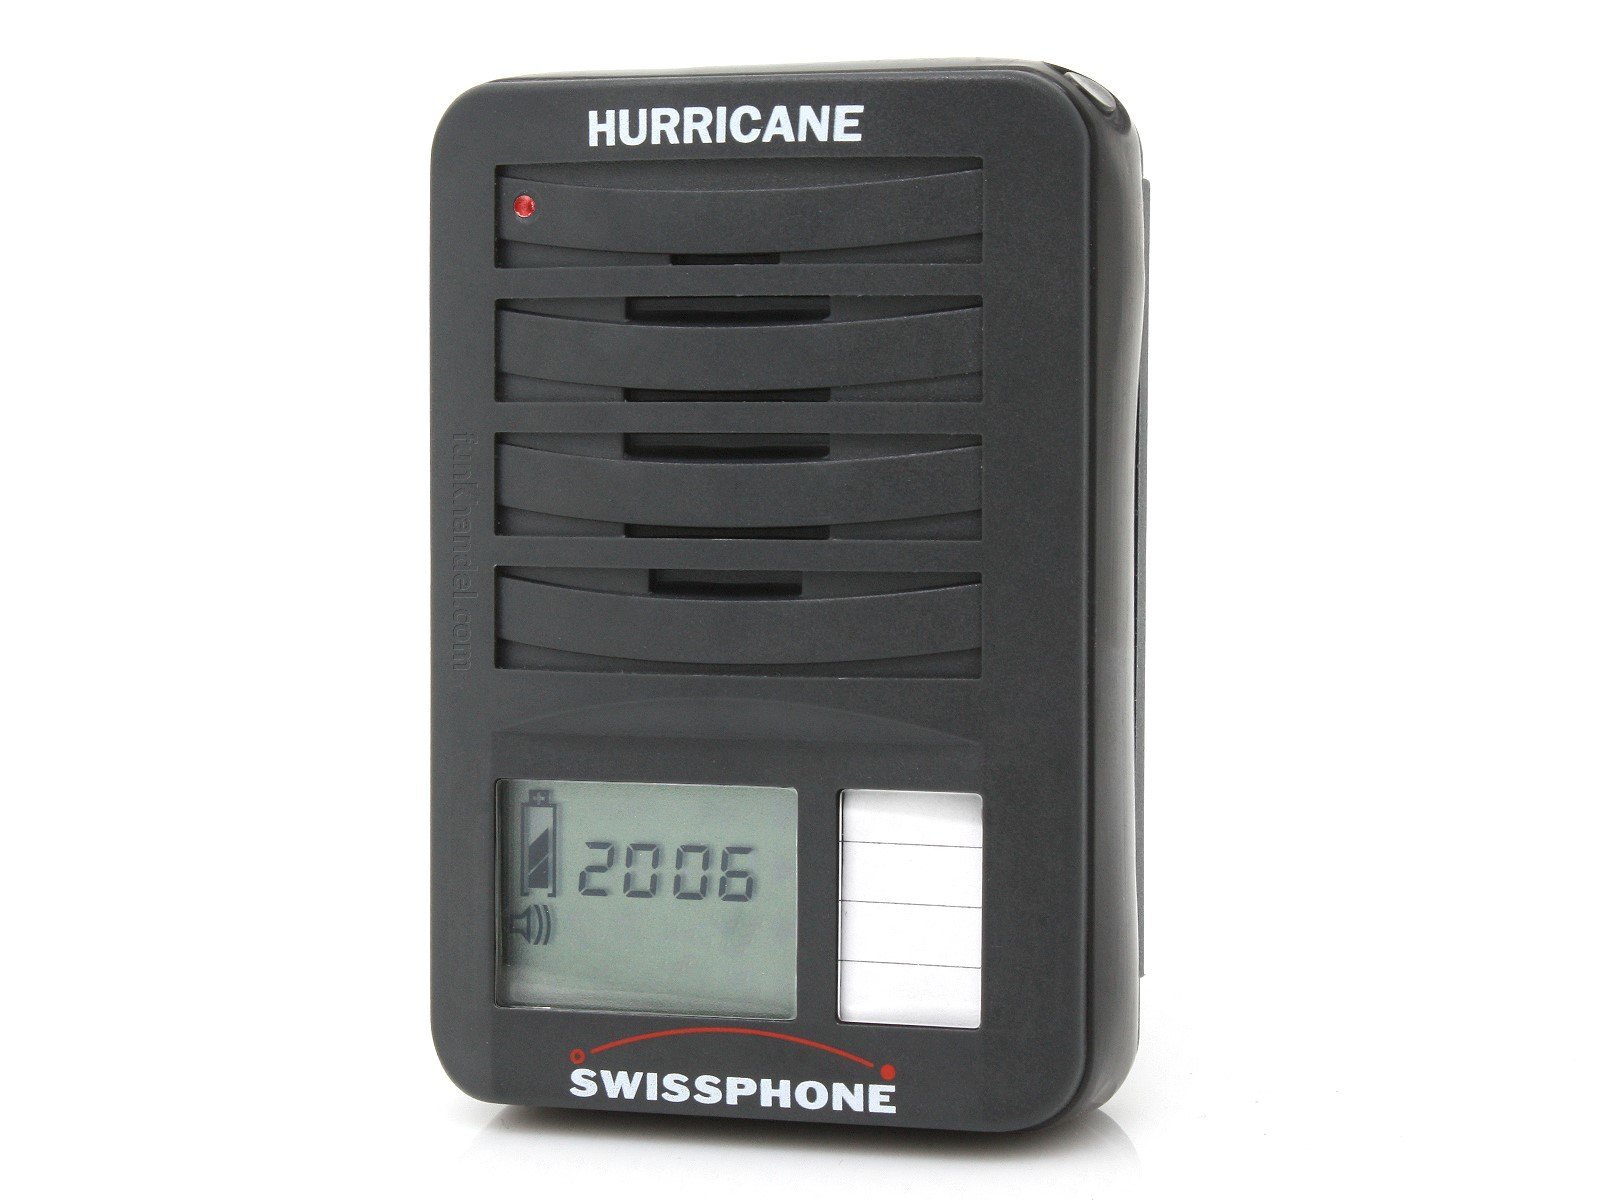 Swissphone Hurricane DV300*